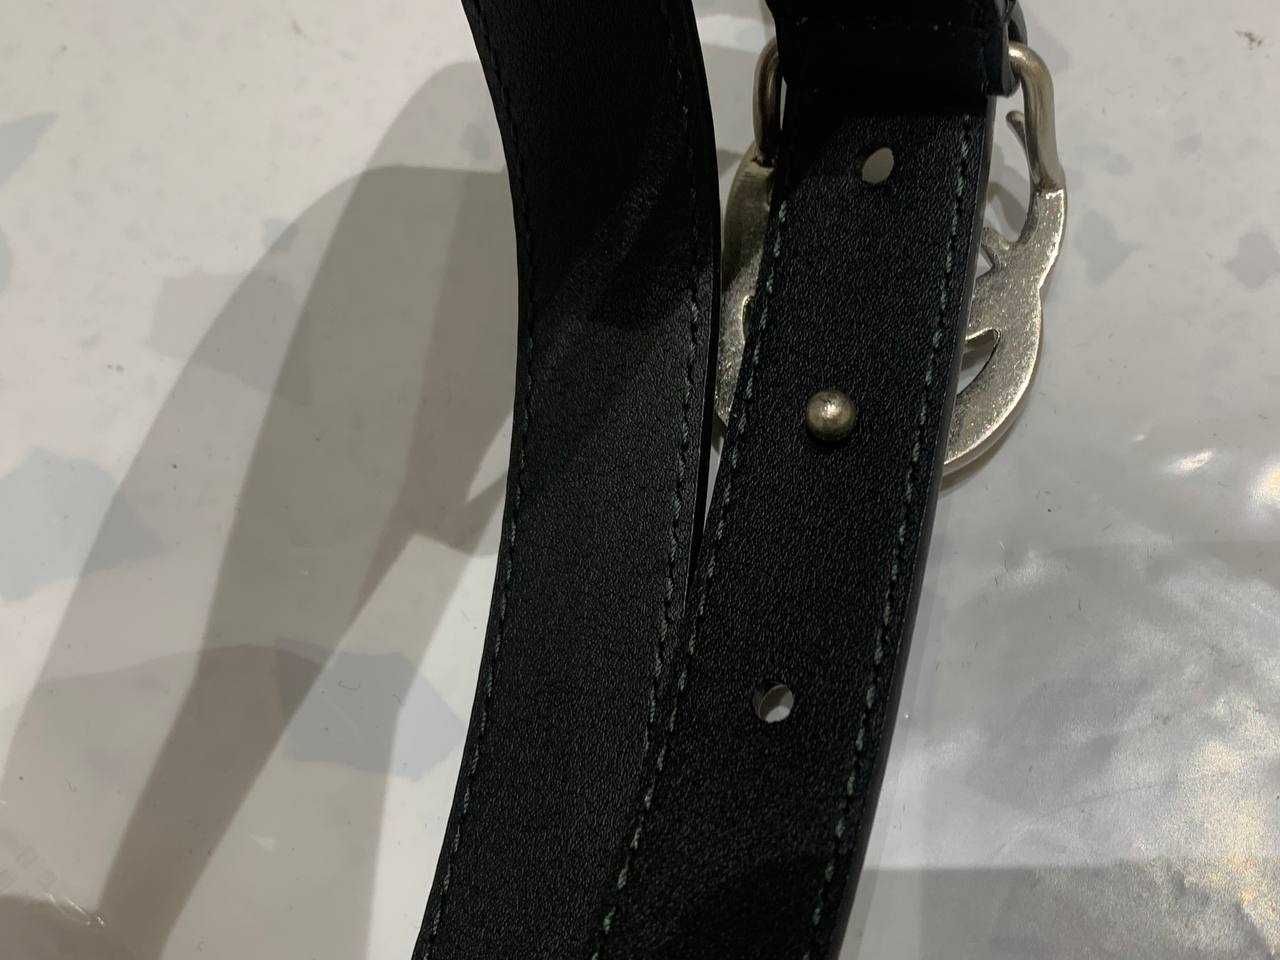 Ремни YSL Belt 2.0 и  Gucci Marmont Leather Belt With Shiny Buckle